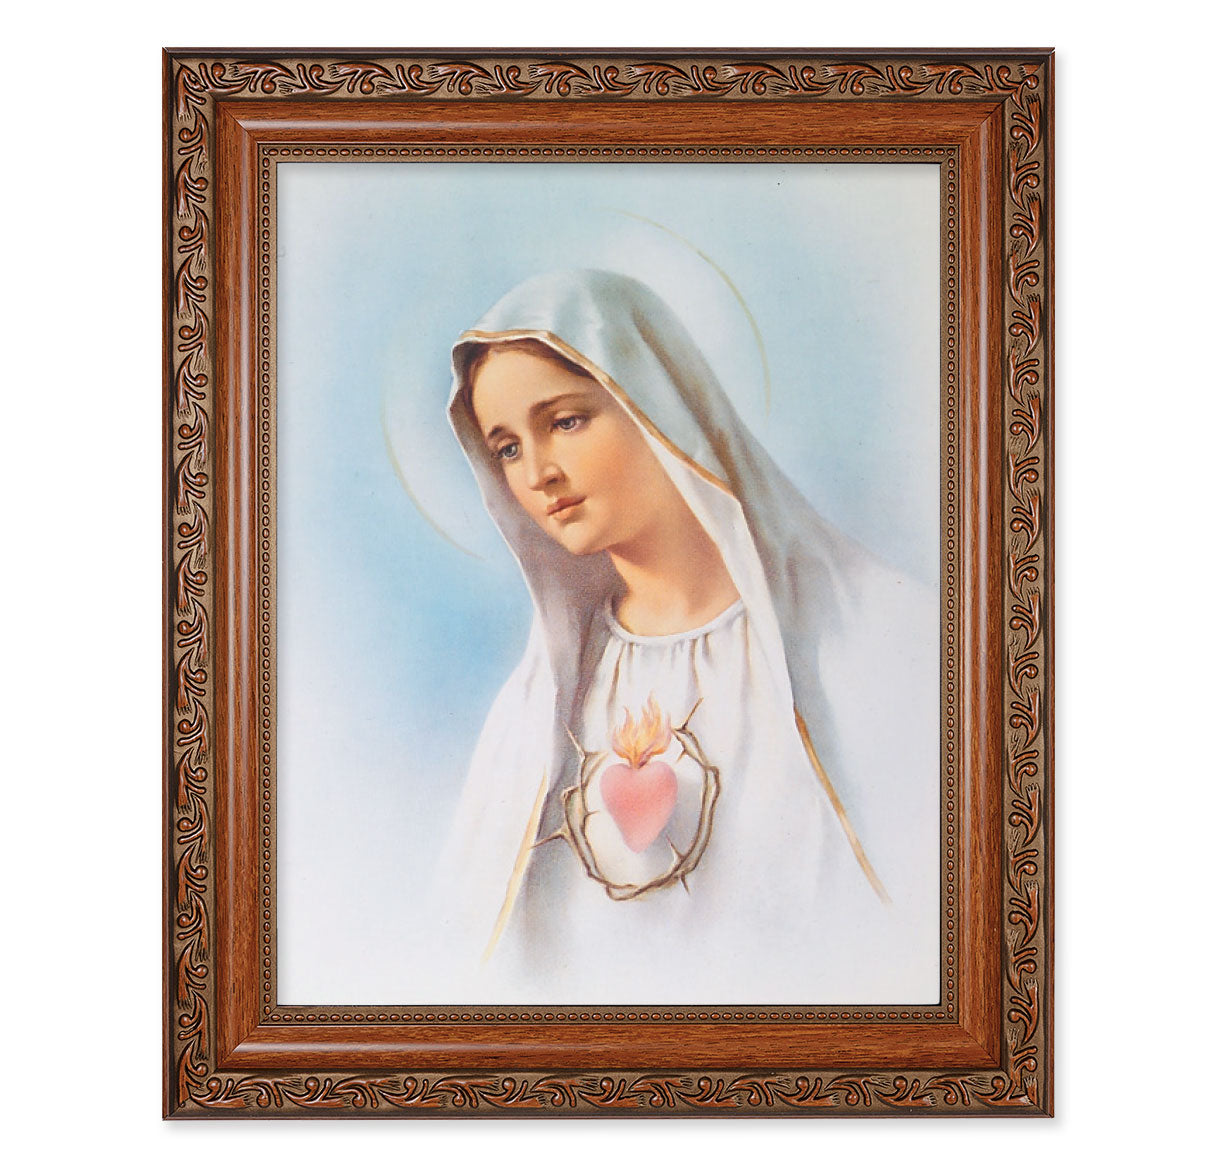 Immaculate Heart of Mary Mahogany Finished Framed Art